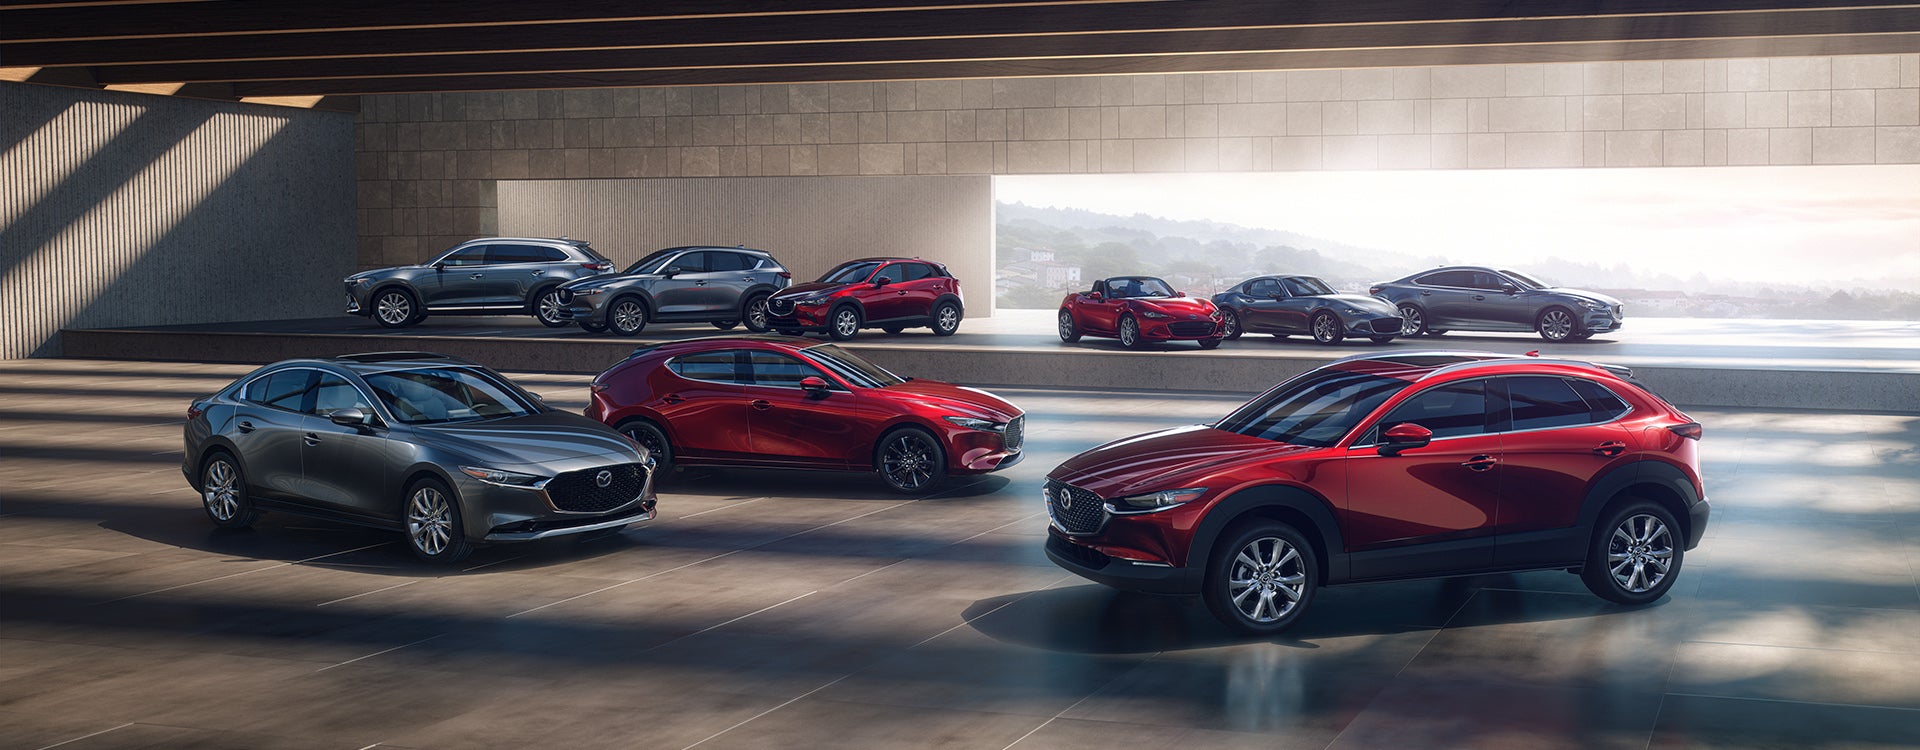 Mazda Family Lineup